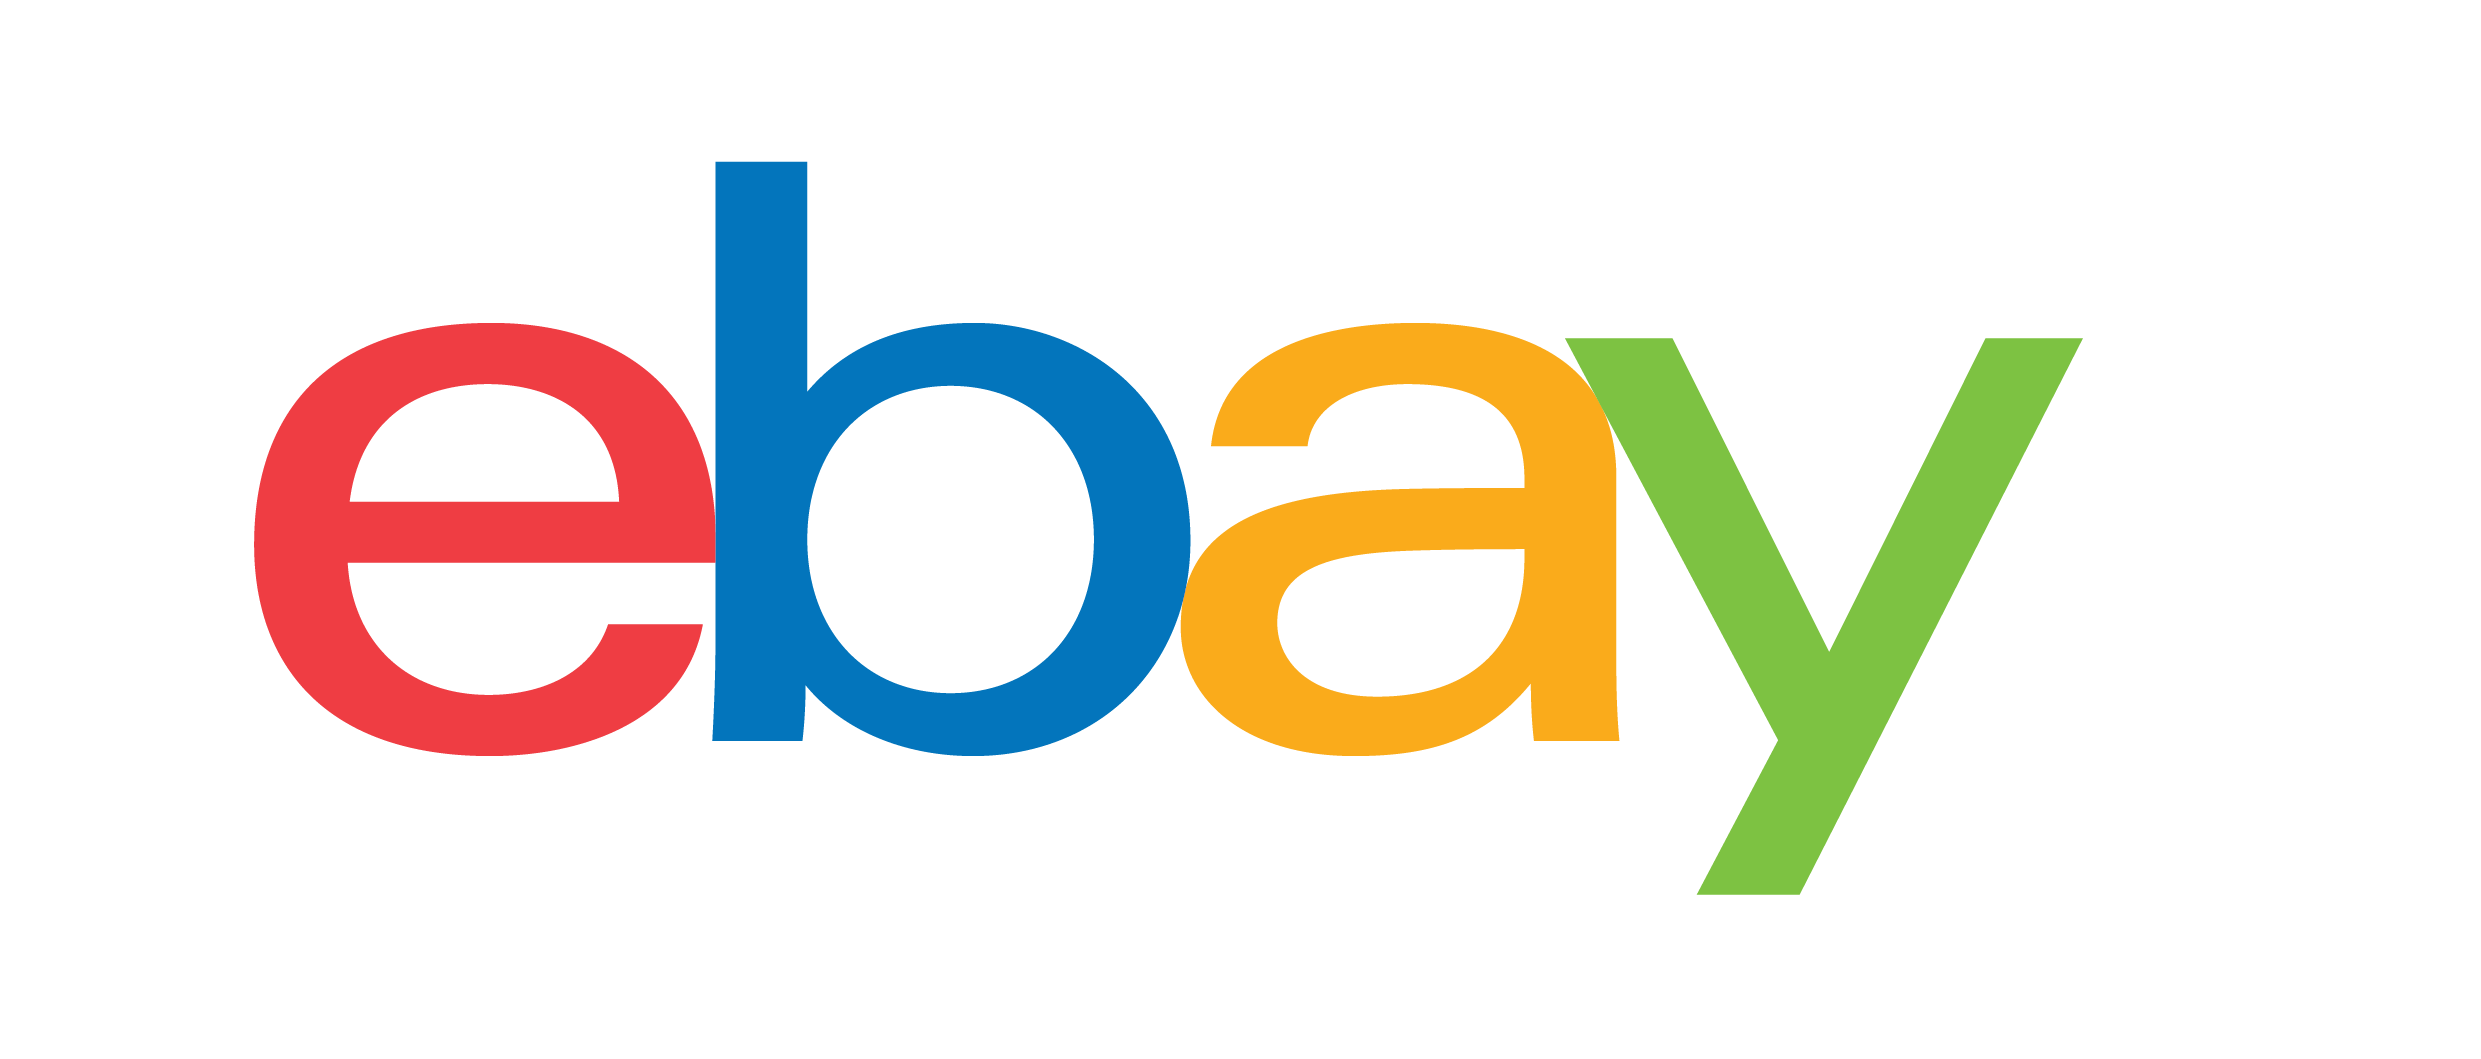 Logotipo do eBay.